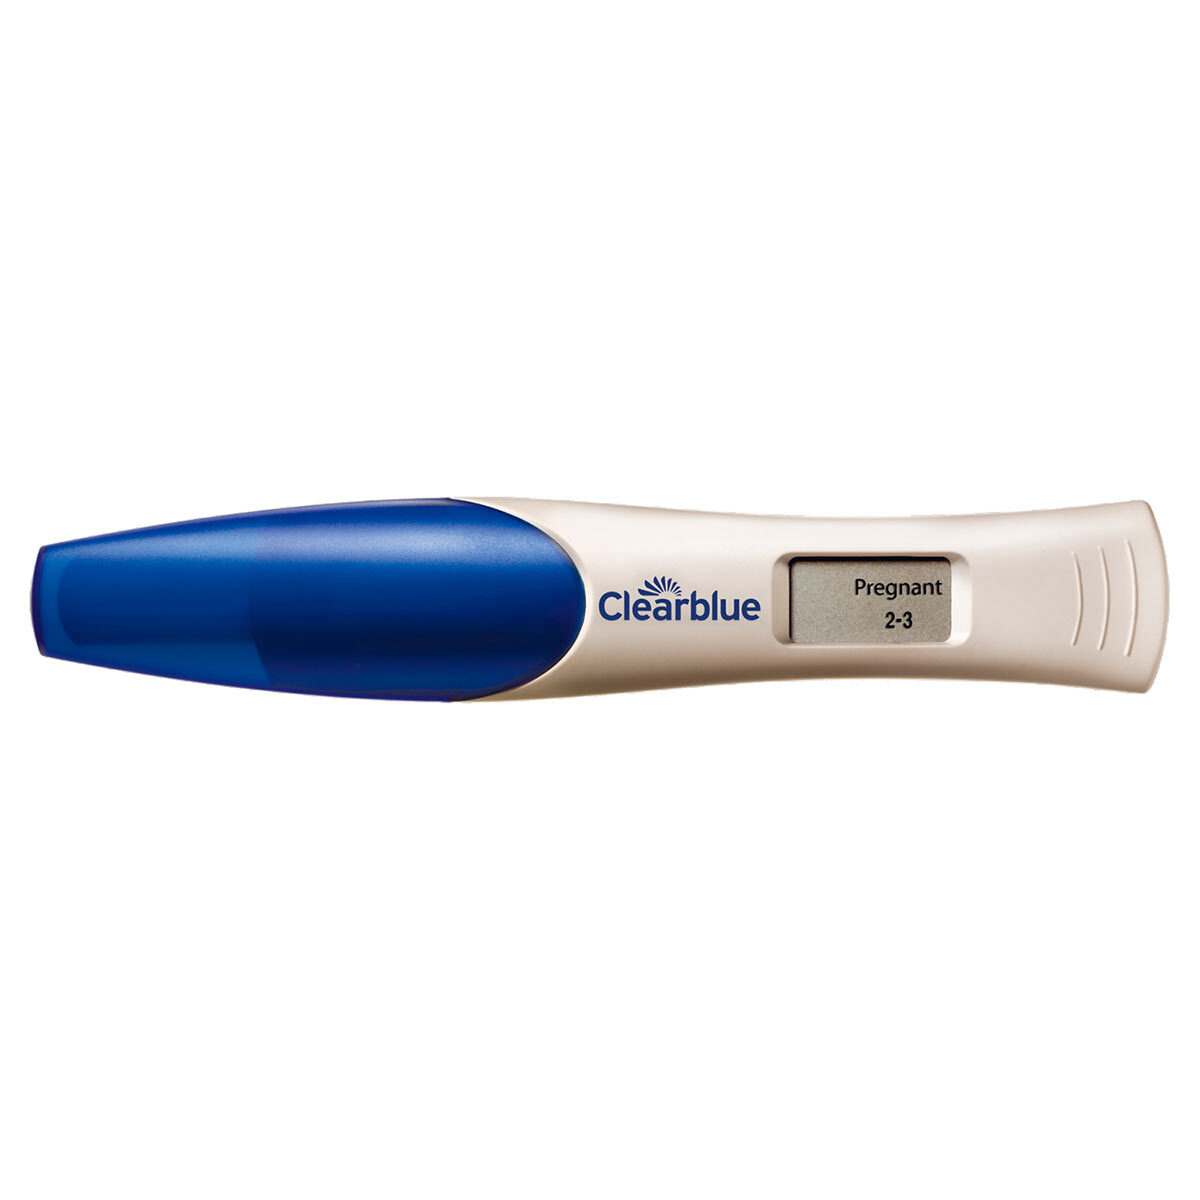 Clearblue Digital Pregnancy Test Sticks, 4 Tests